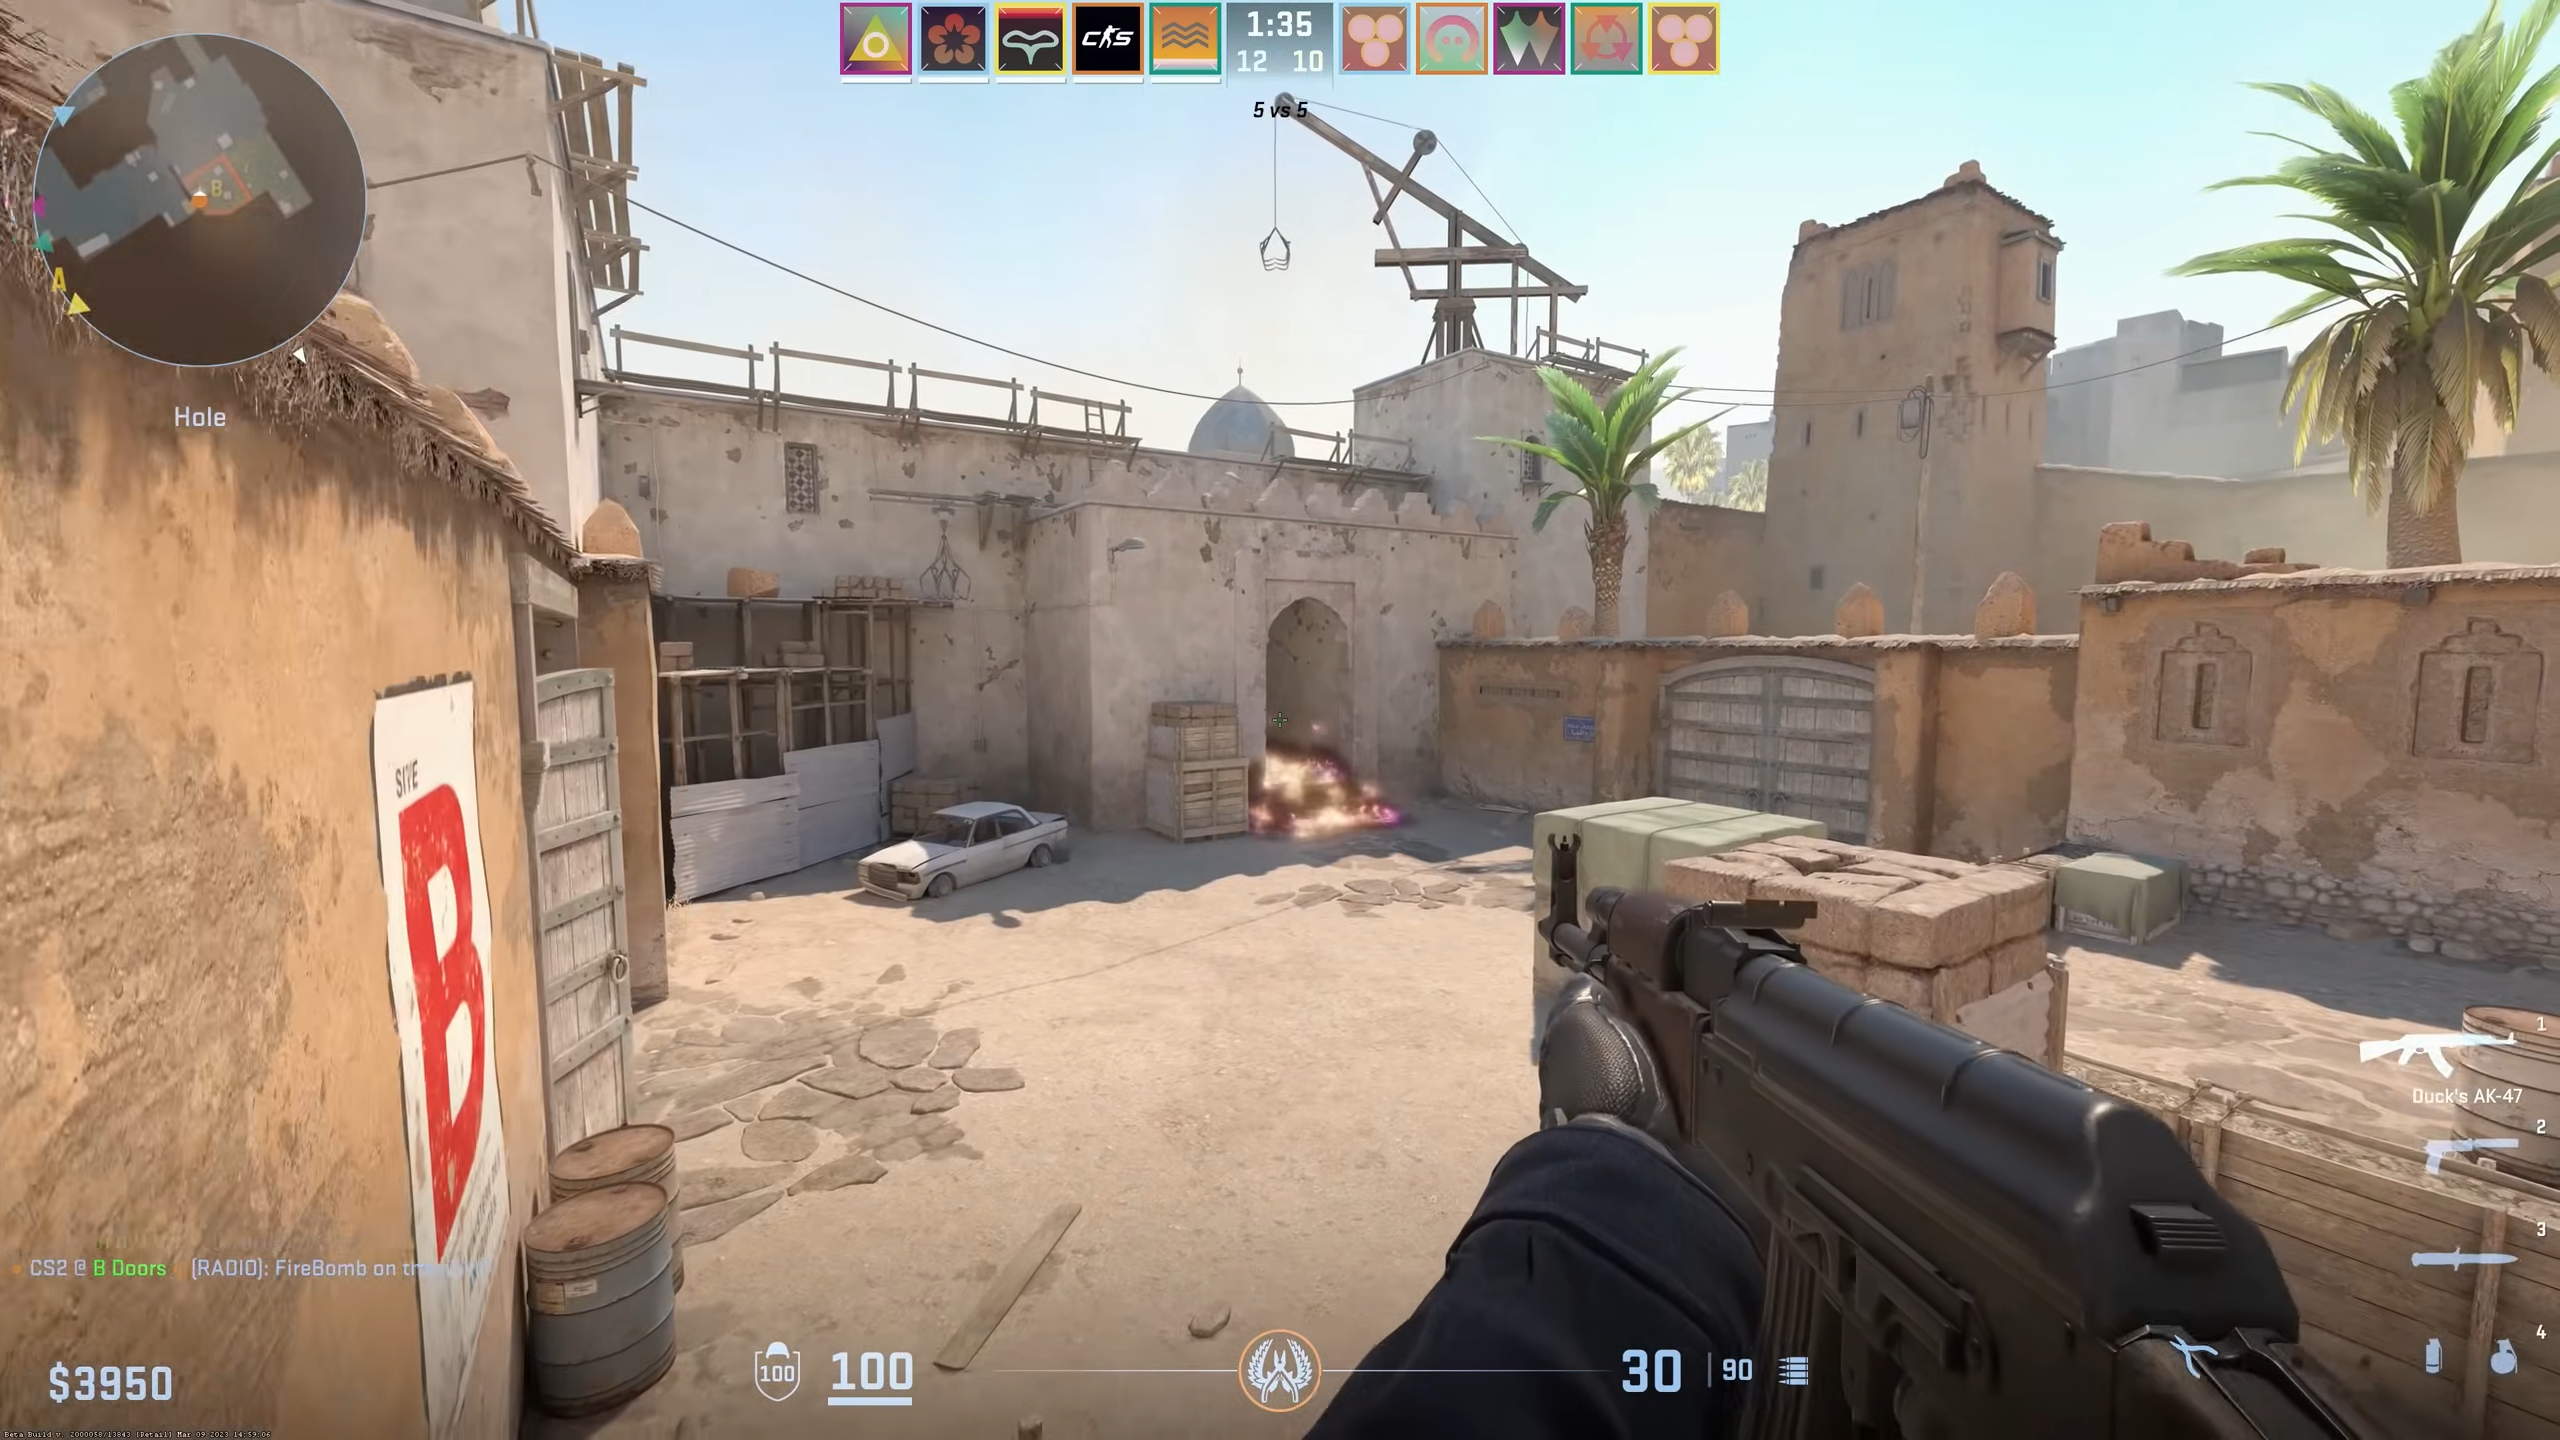 Counter Strike 2, counter-strike, games, HD wallpaper